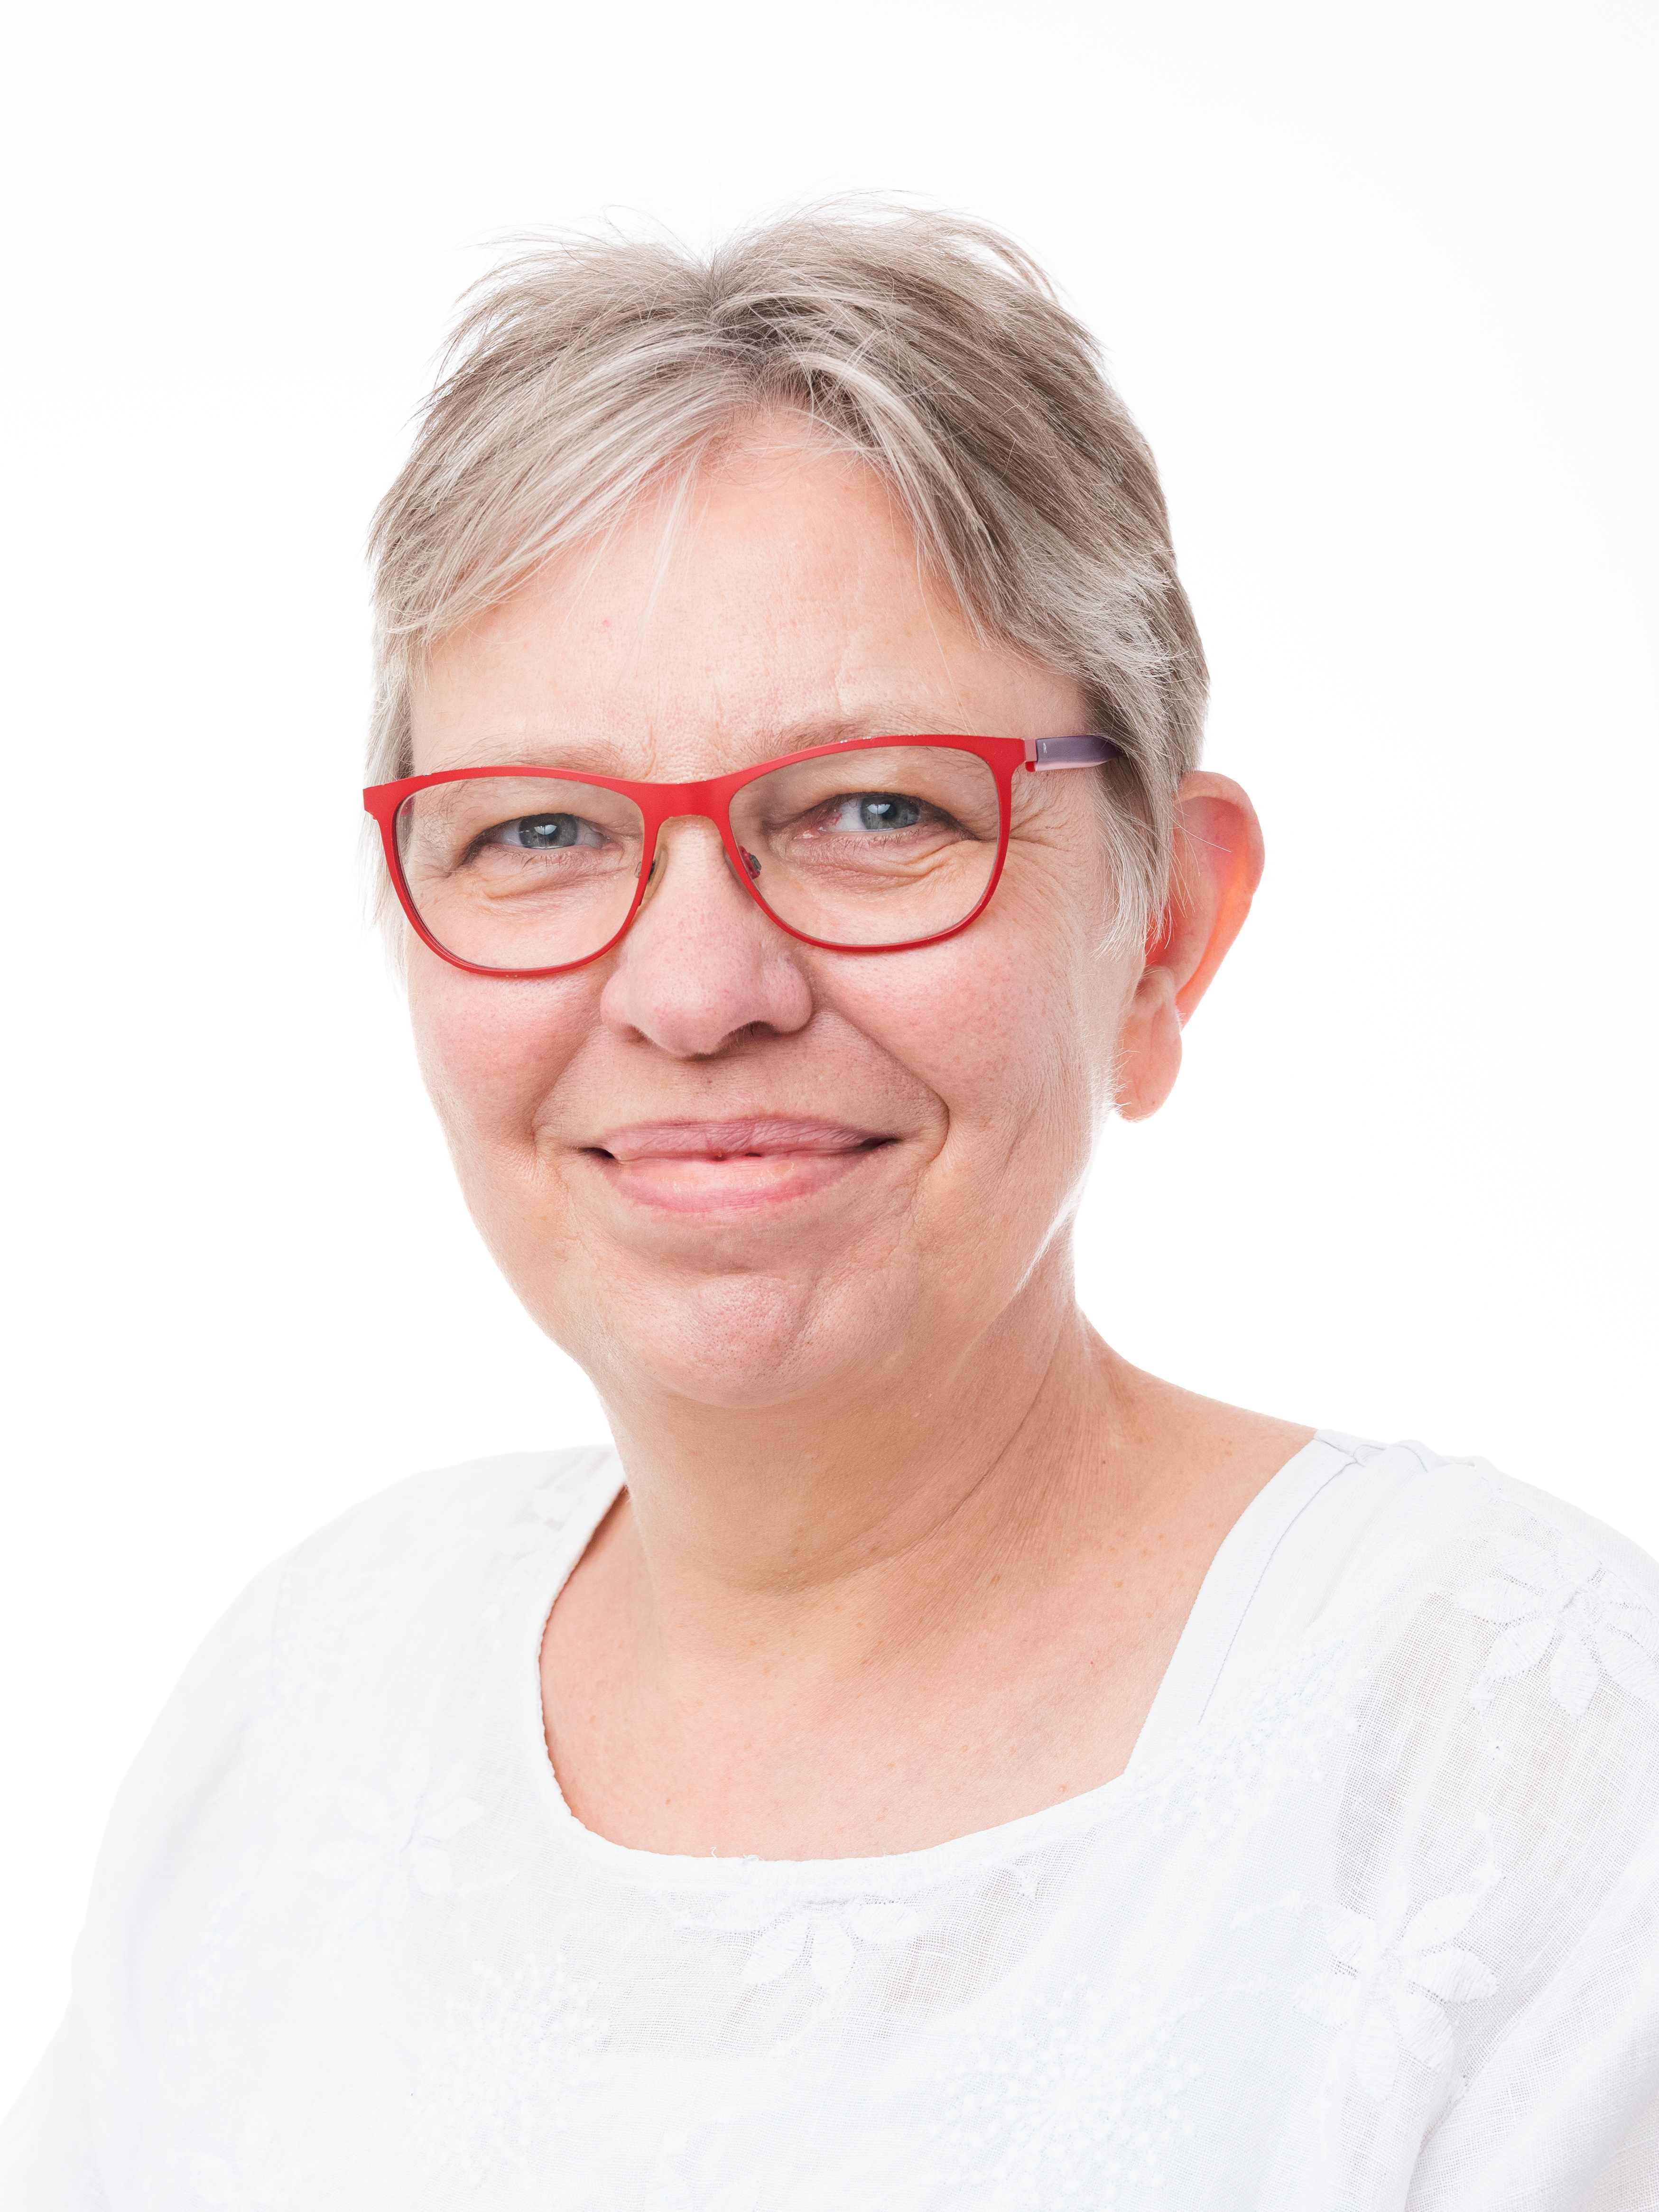 Martina C. Cornel, PhD, Amsterdam University, The Netherlands